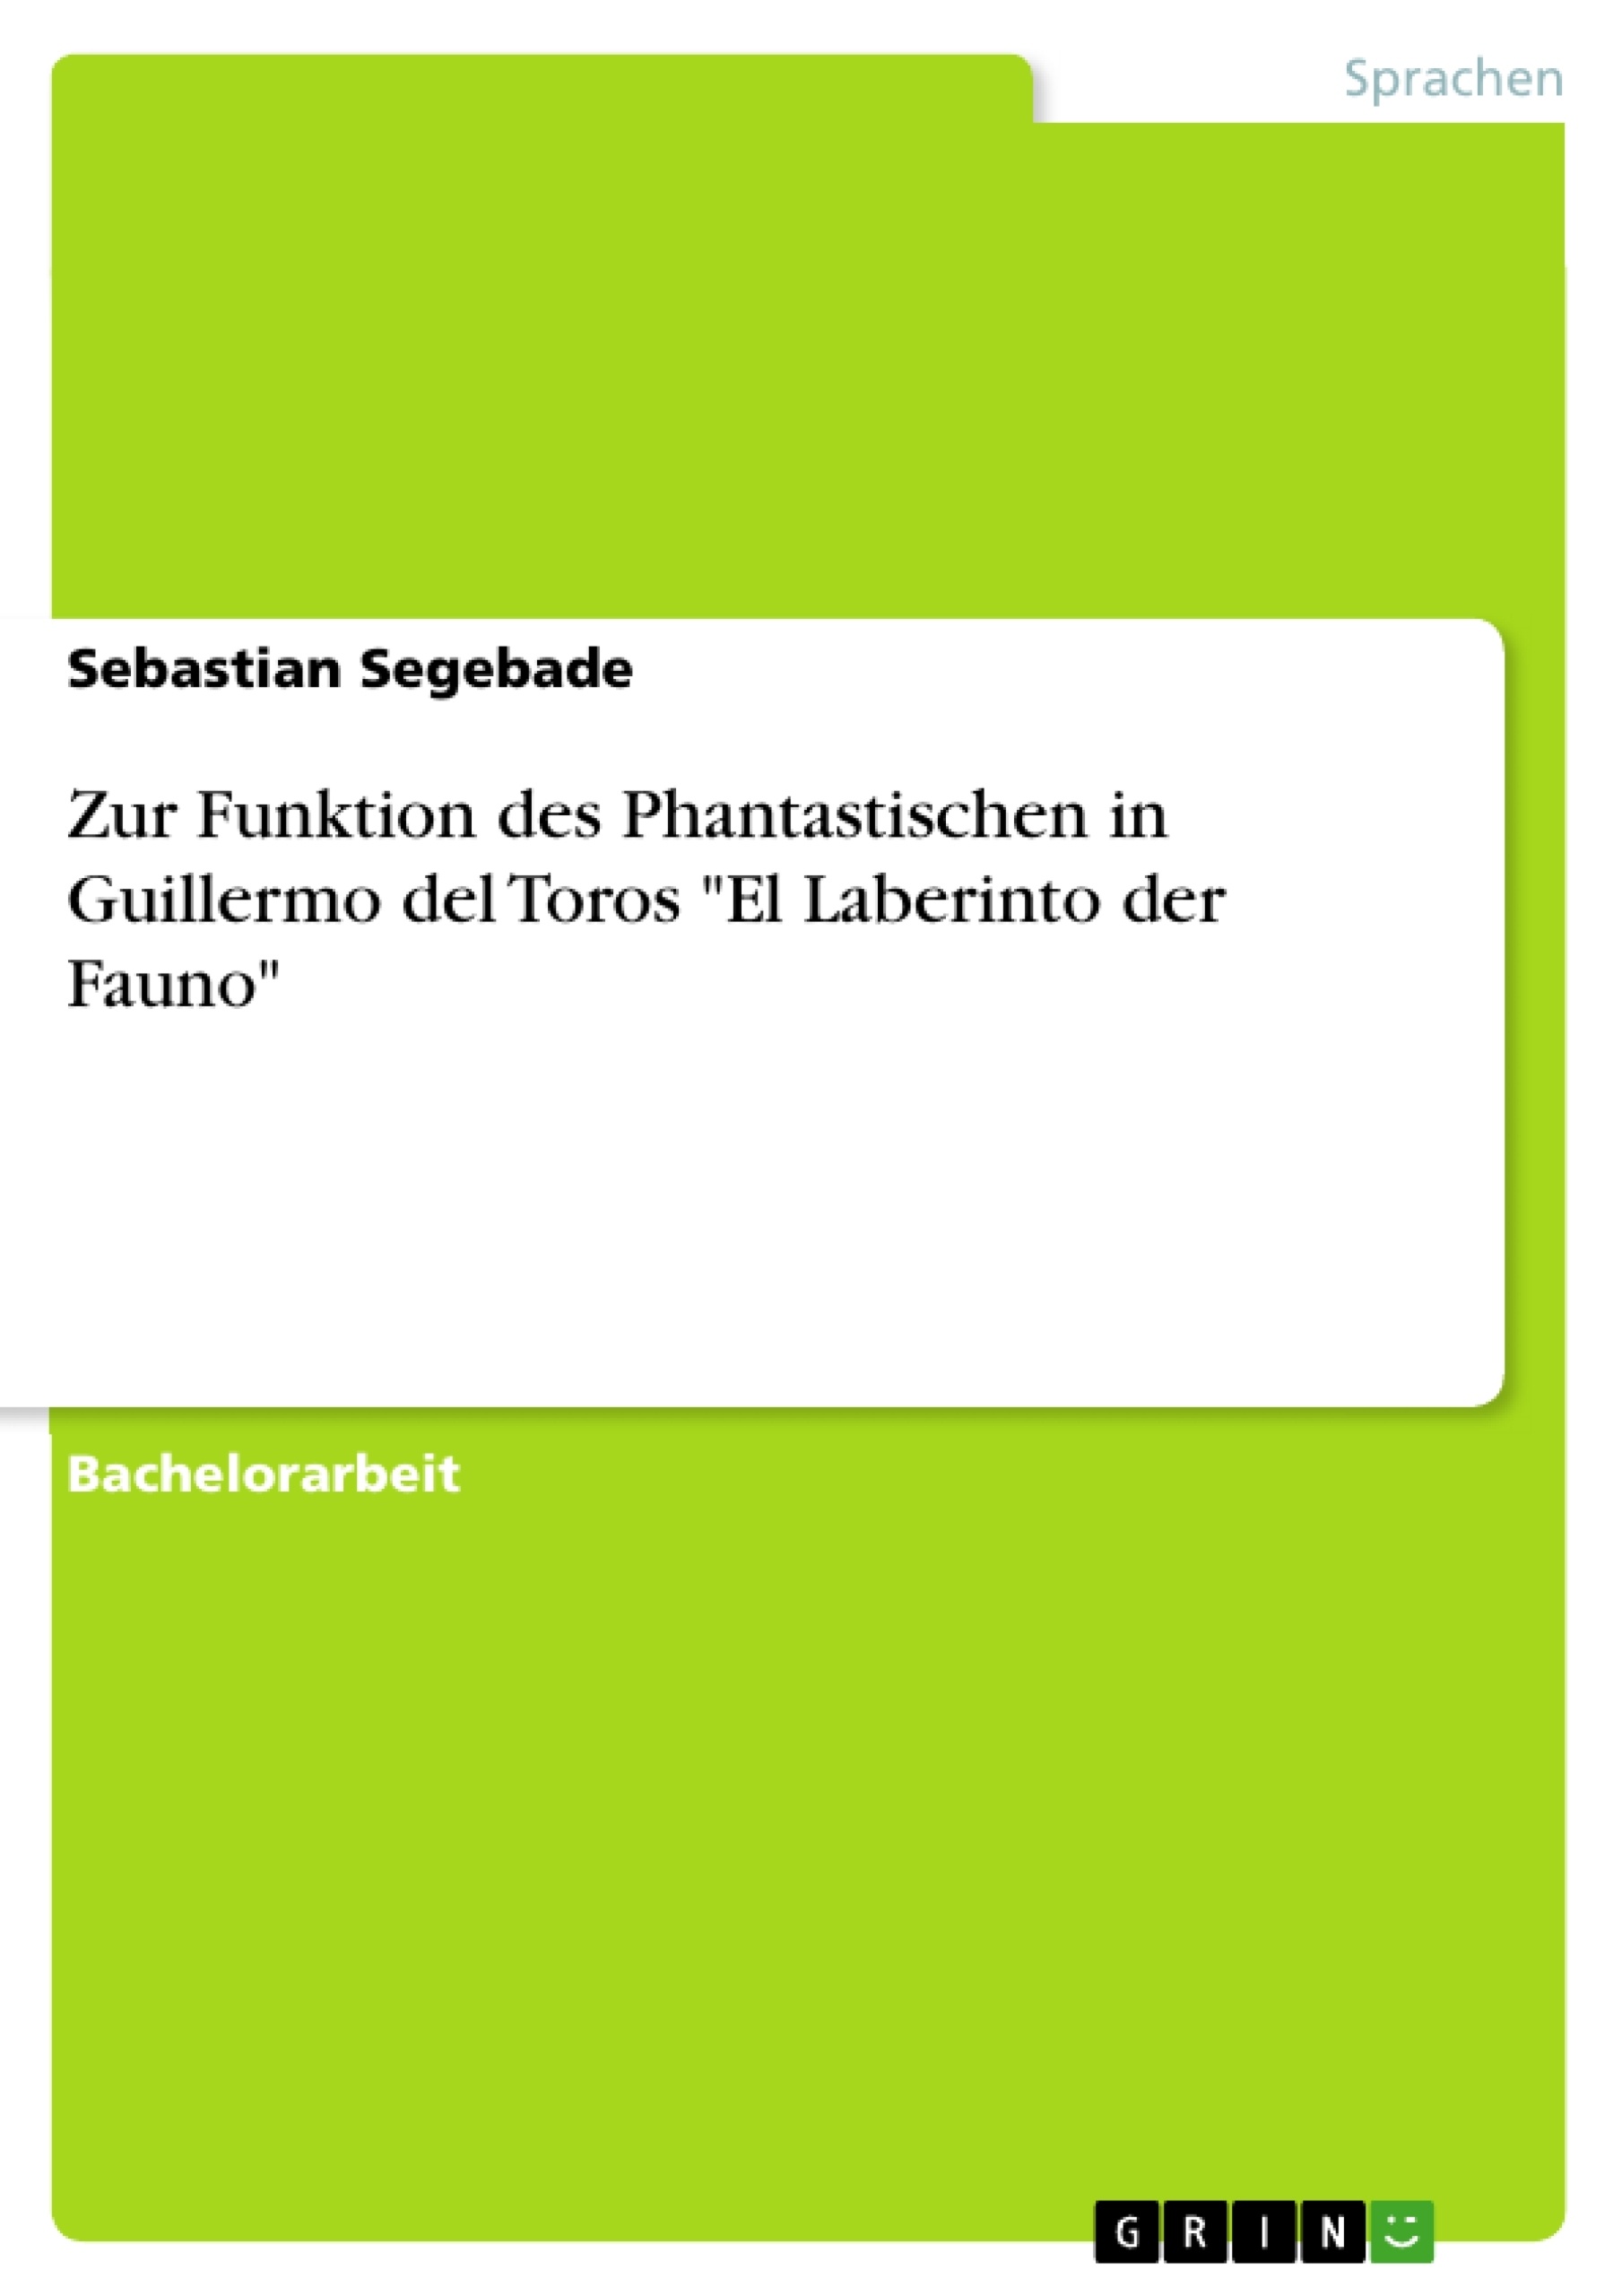 Title: Zur Funktion des Phantastischen in Guillermo del Toros "El Laberinto der Fauno"